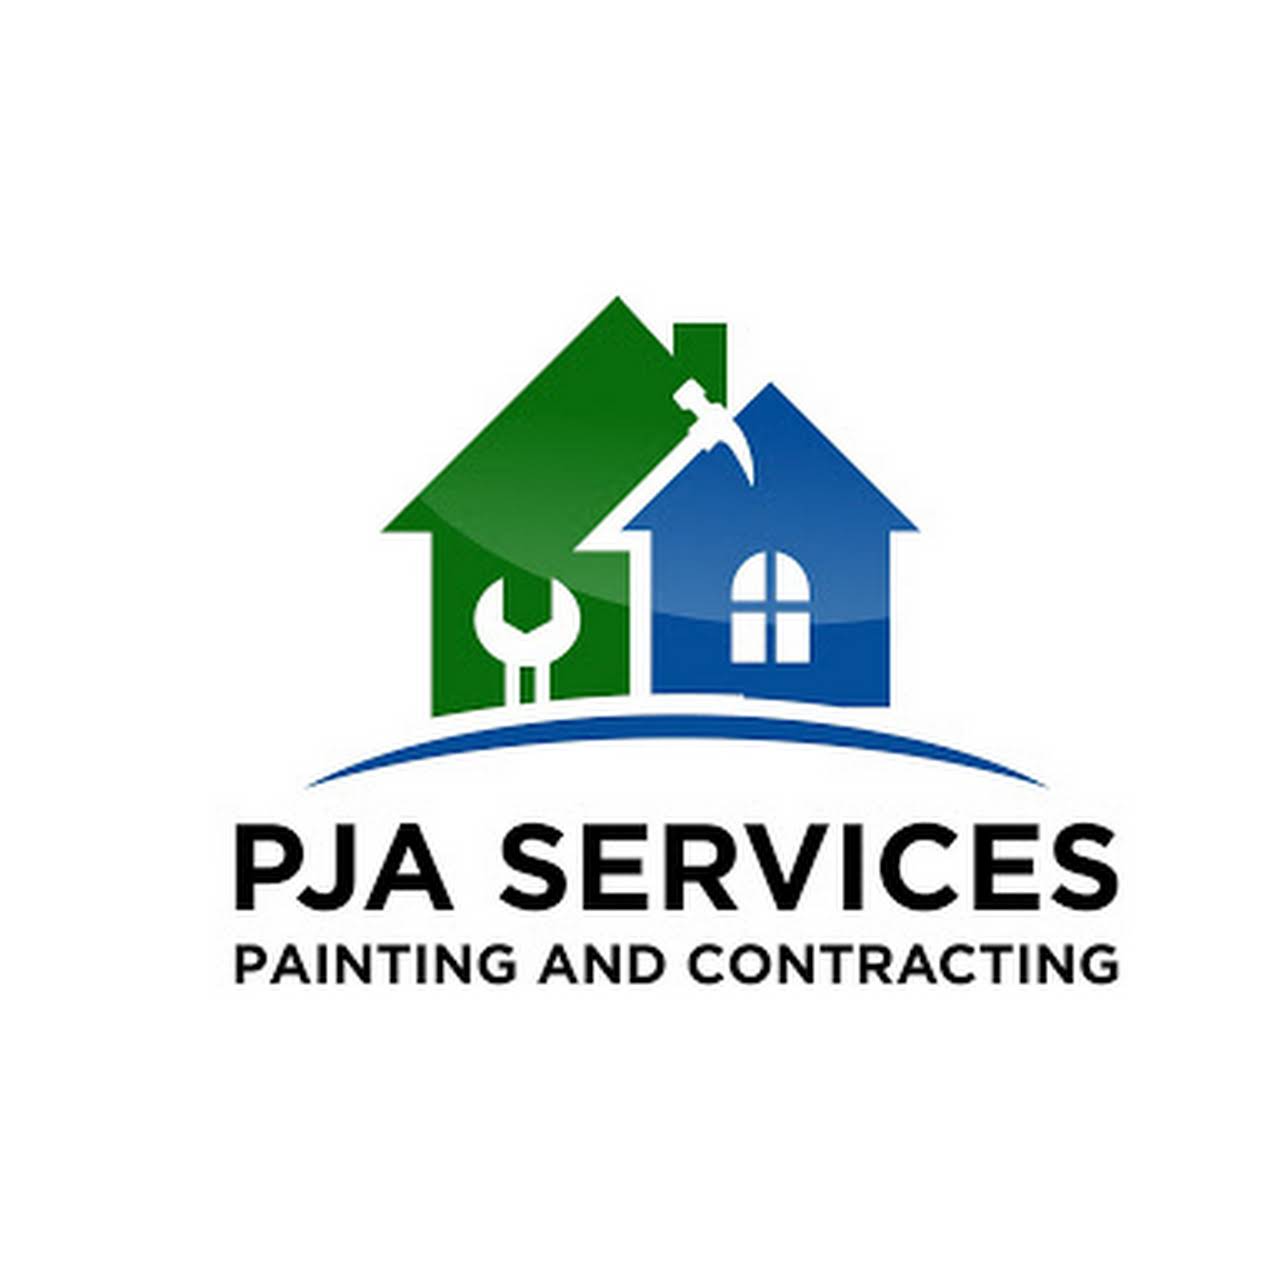 PJA Services